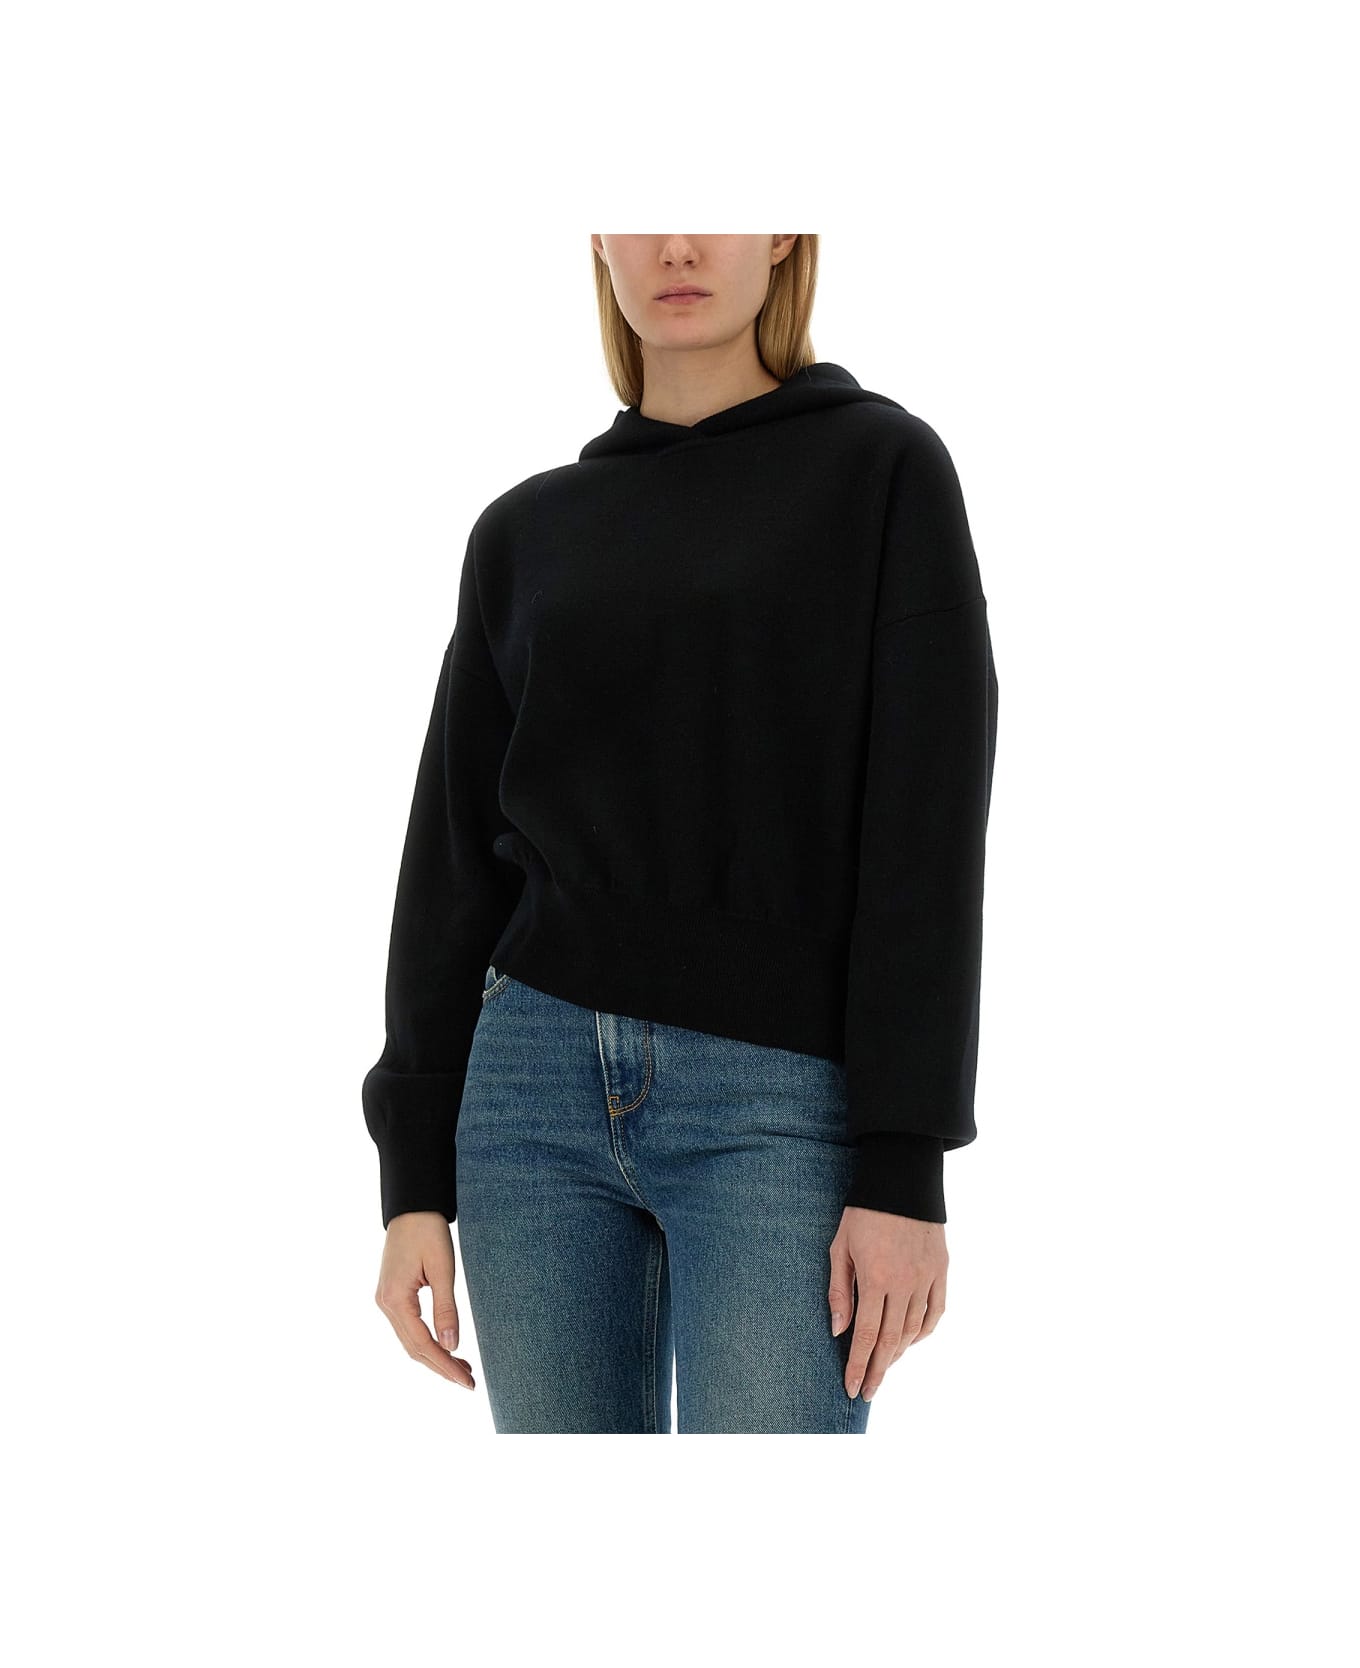 Canada Goose Knit Sweatshirt - BLACK